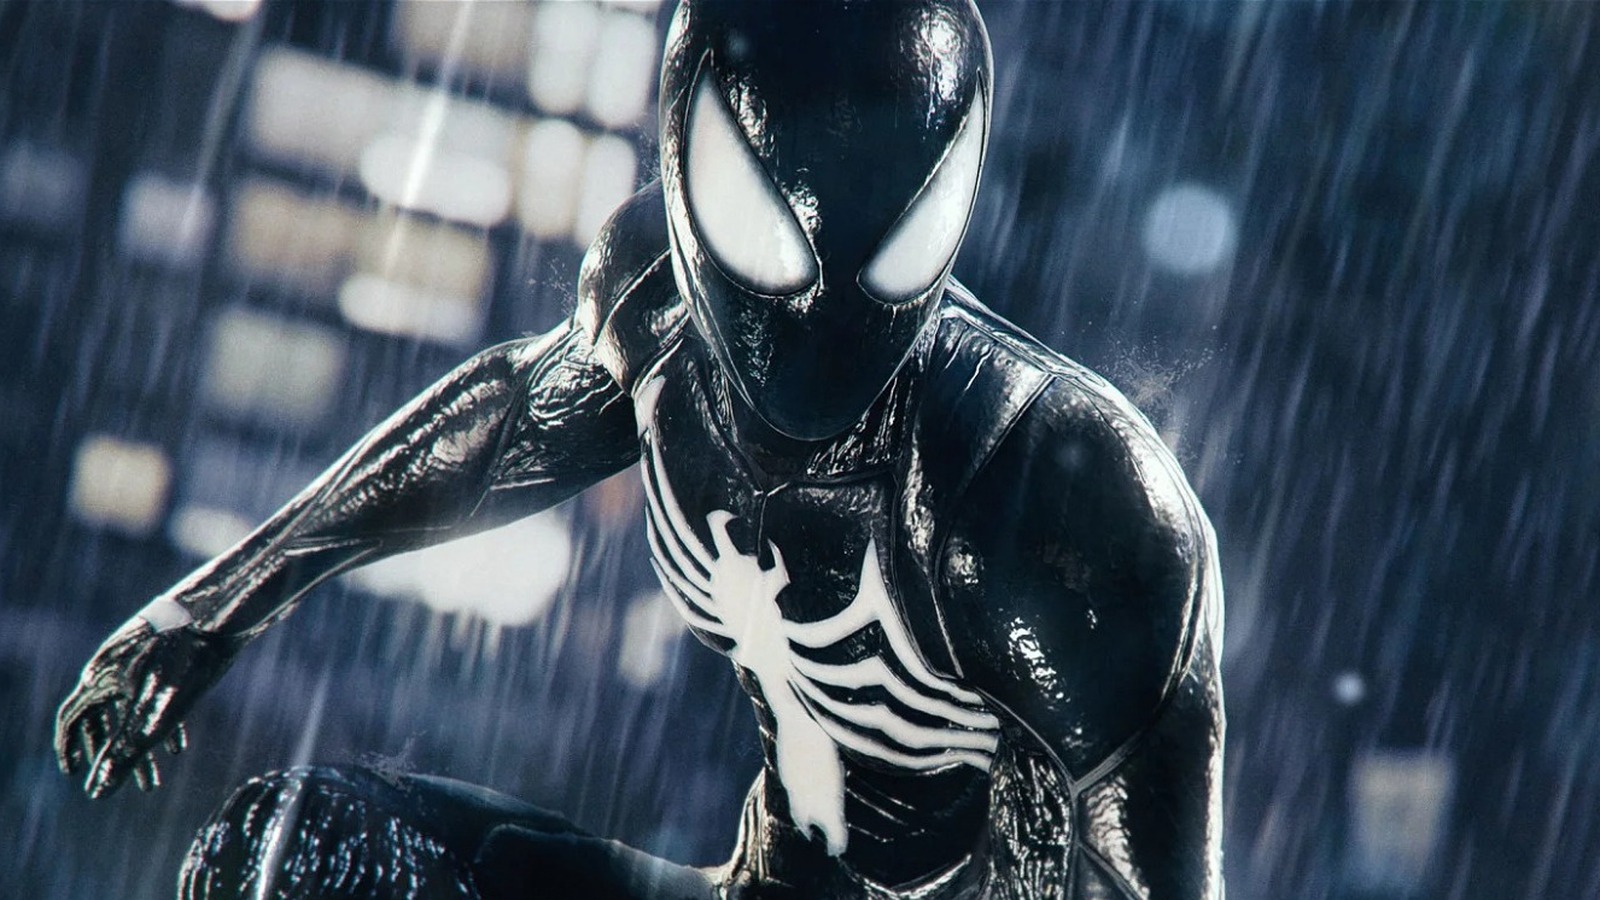 Marvel's Spider-Man 2 Villains Revealed - Kraven, Prowler & More